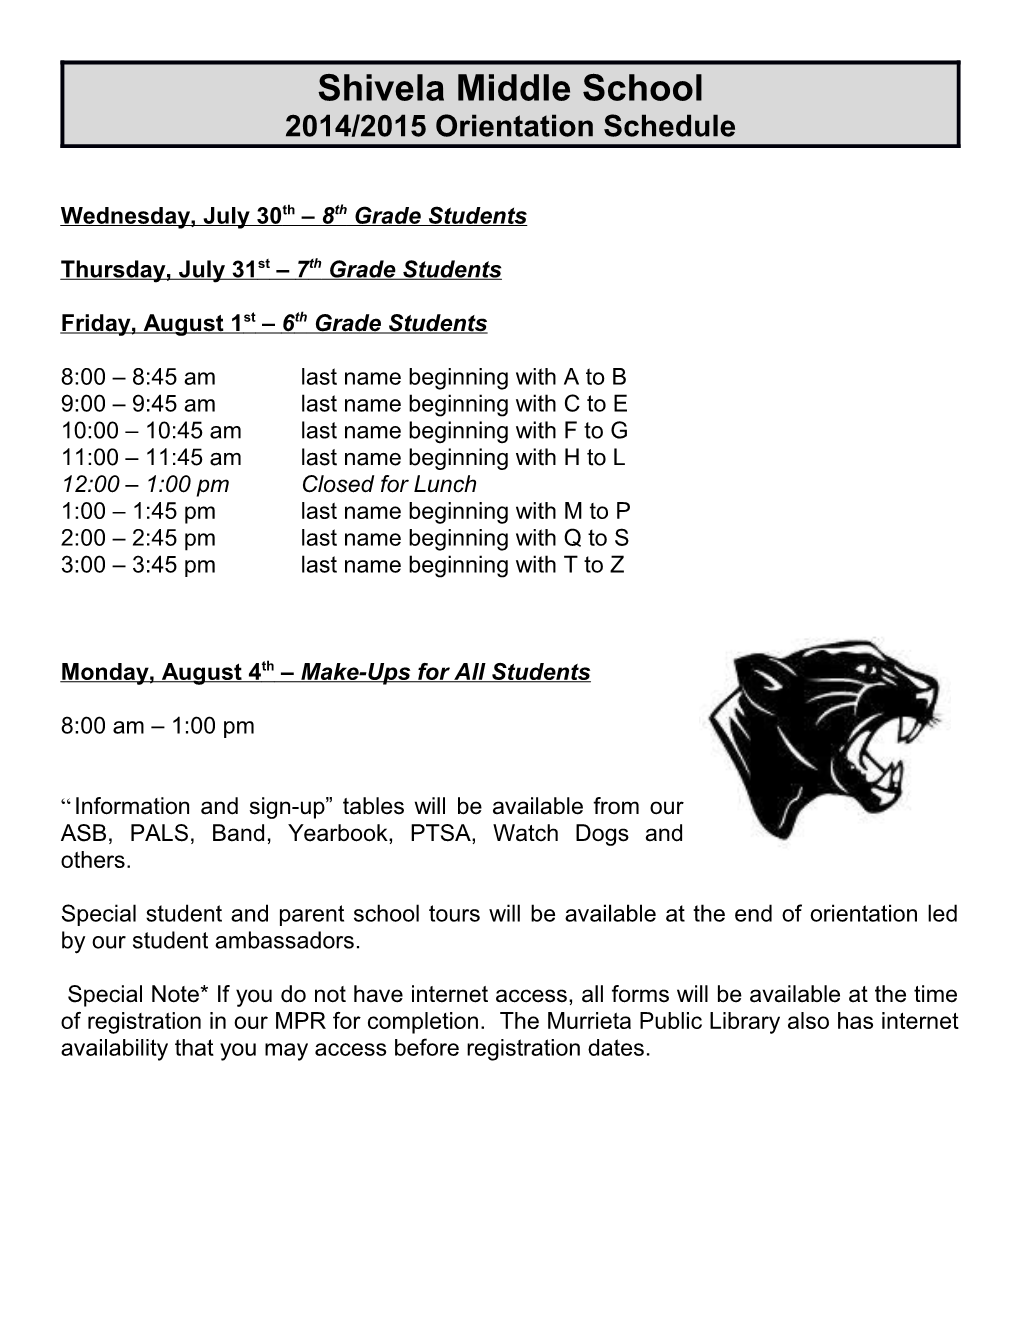 Shivela Middle School 2014/2015 Orientation Schedule